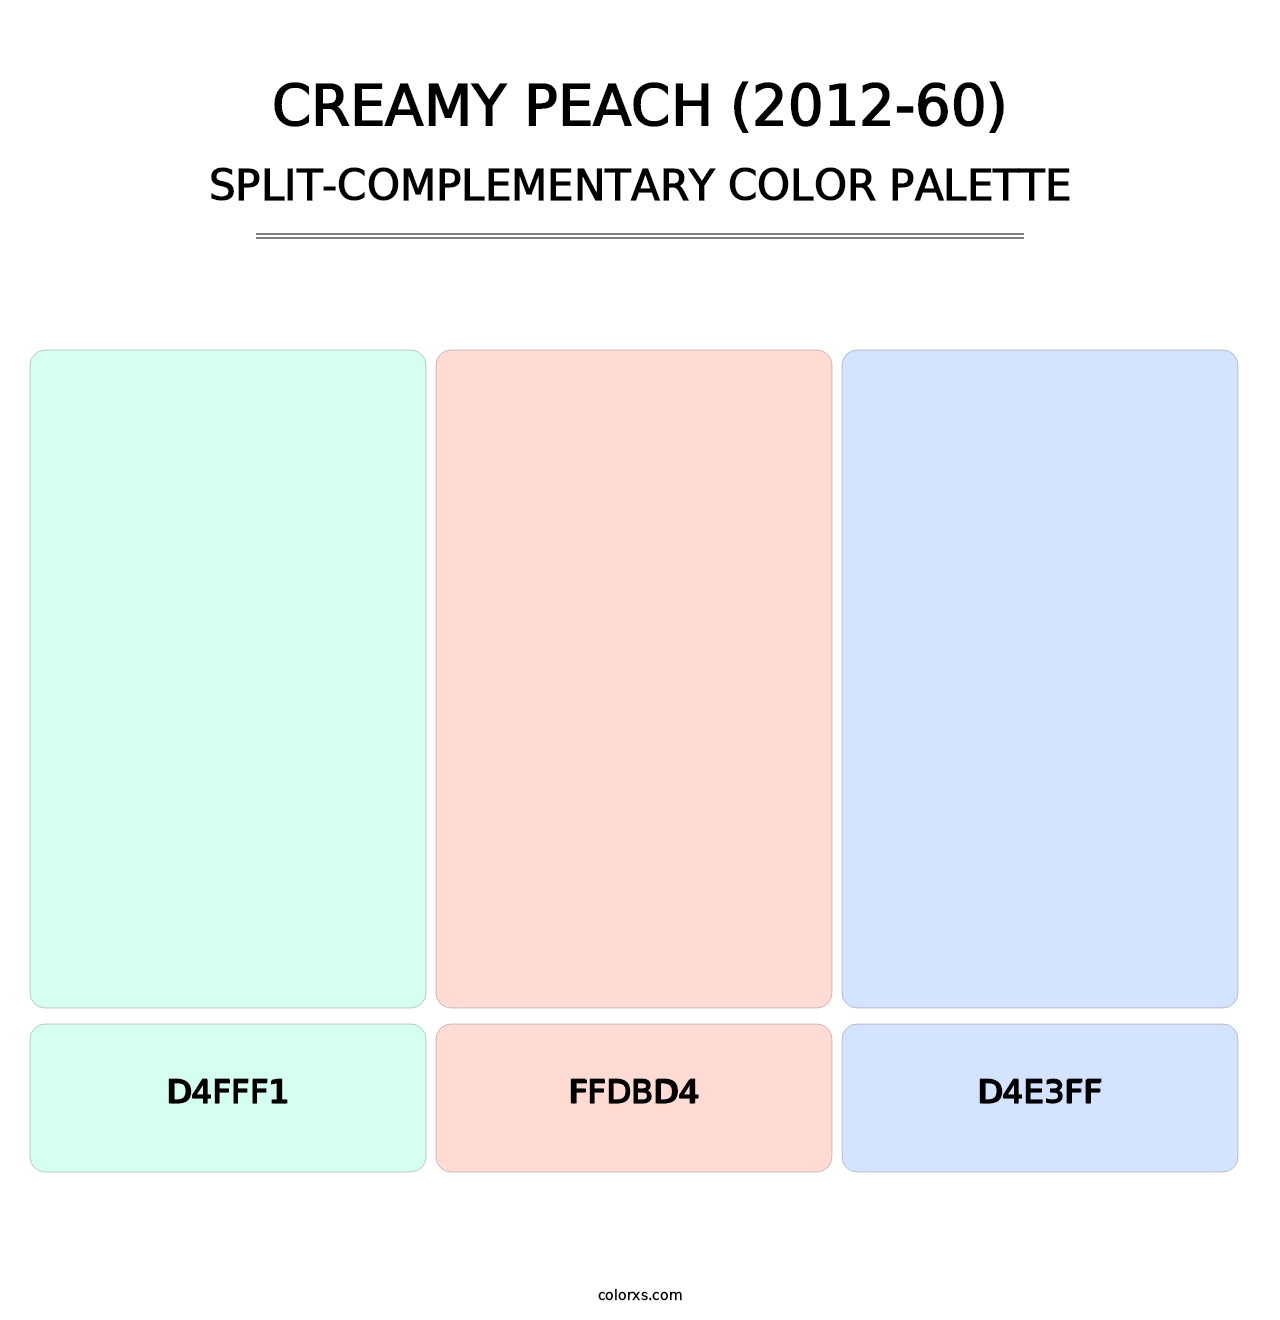 Creamy Peach (2012-60) - Split-Complementary Color Palette